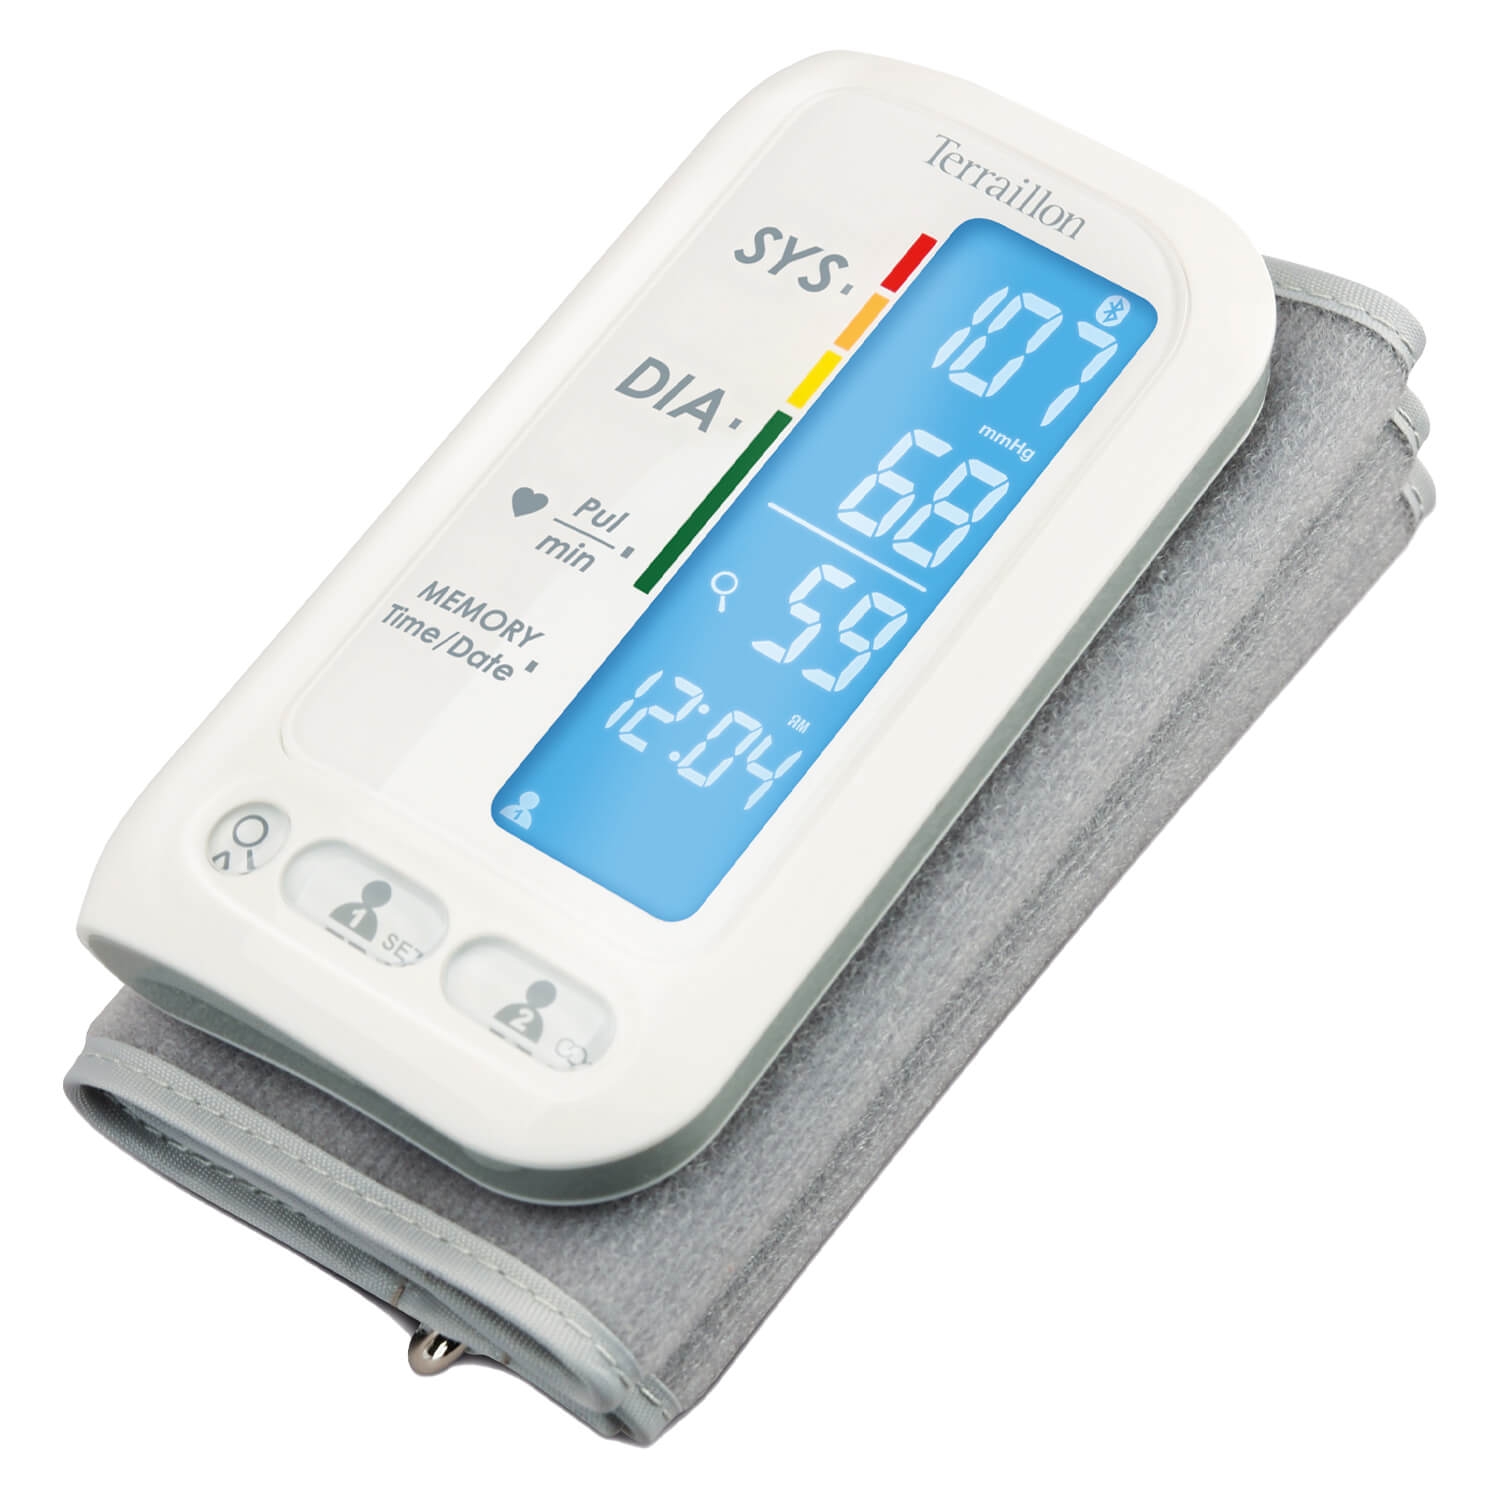 Produktbild von Terraillon - Tensio Bras vernetztes Armblutdruckgerät